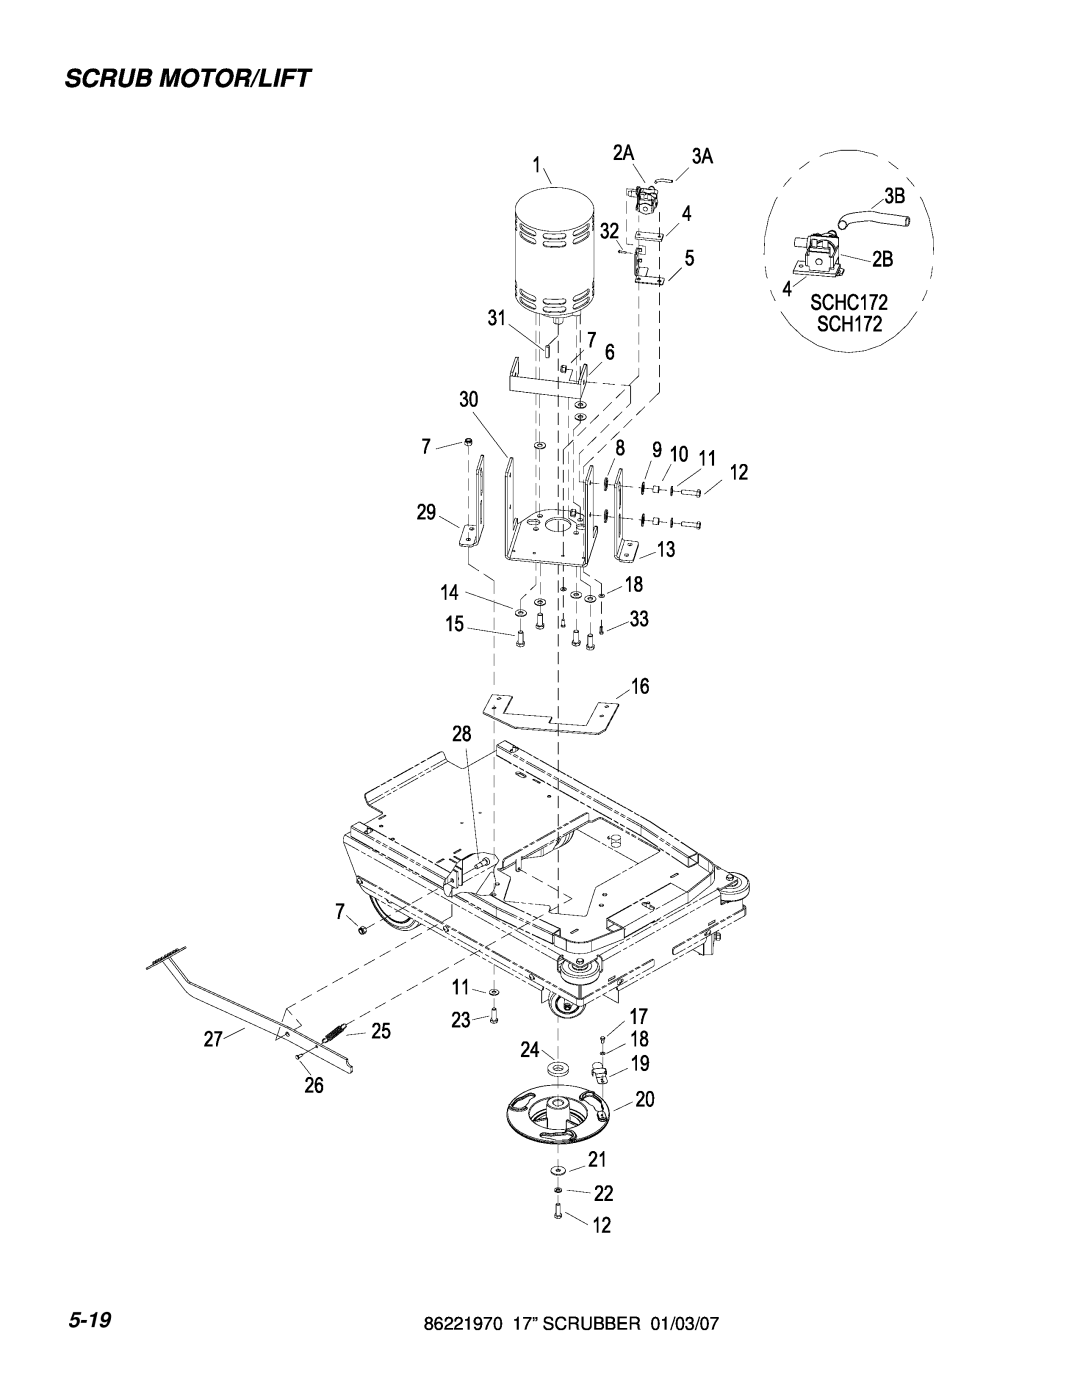 Windsor manual Scrub Motor/Lift, 5-19, 86221970 17” SCRUBBER 01/03/07 